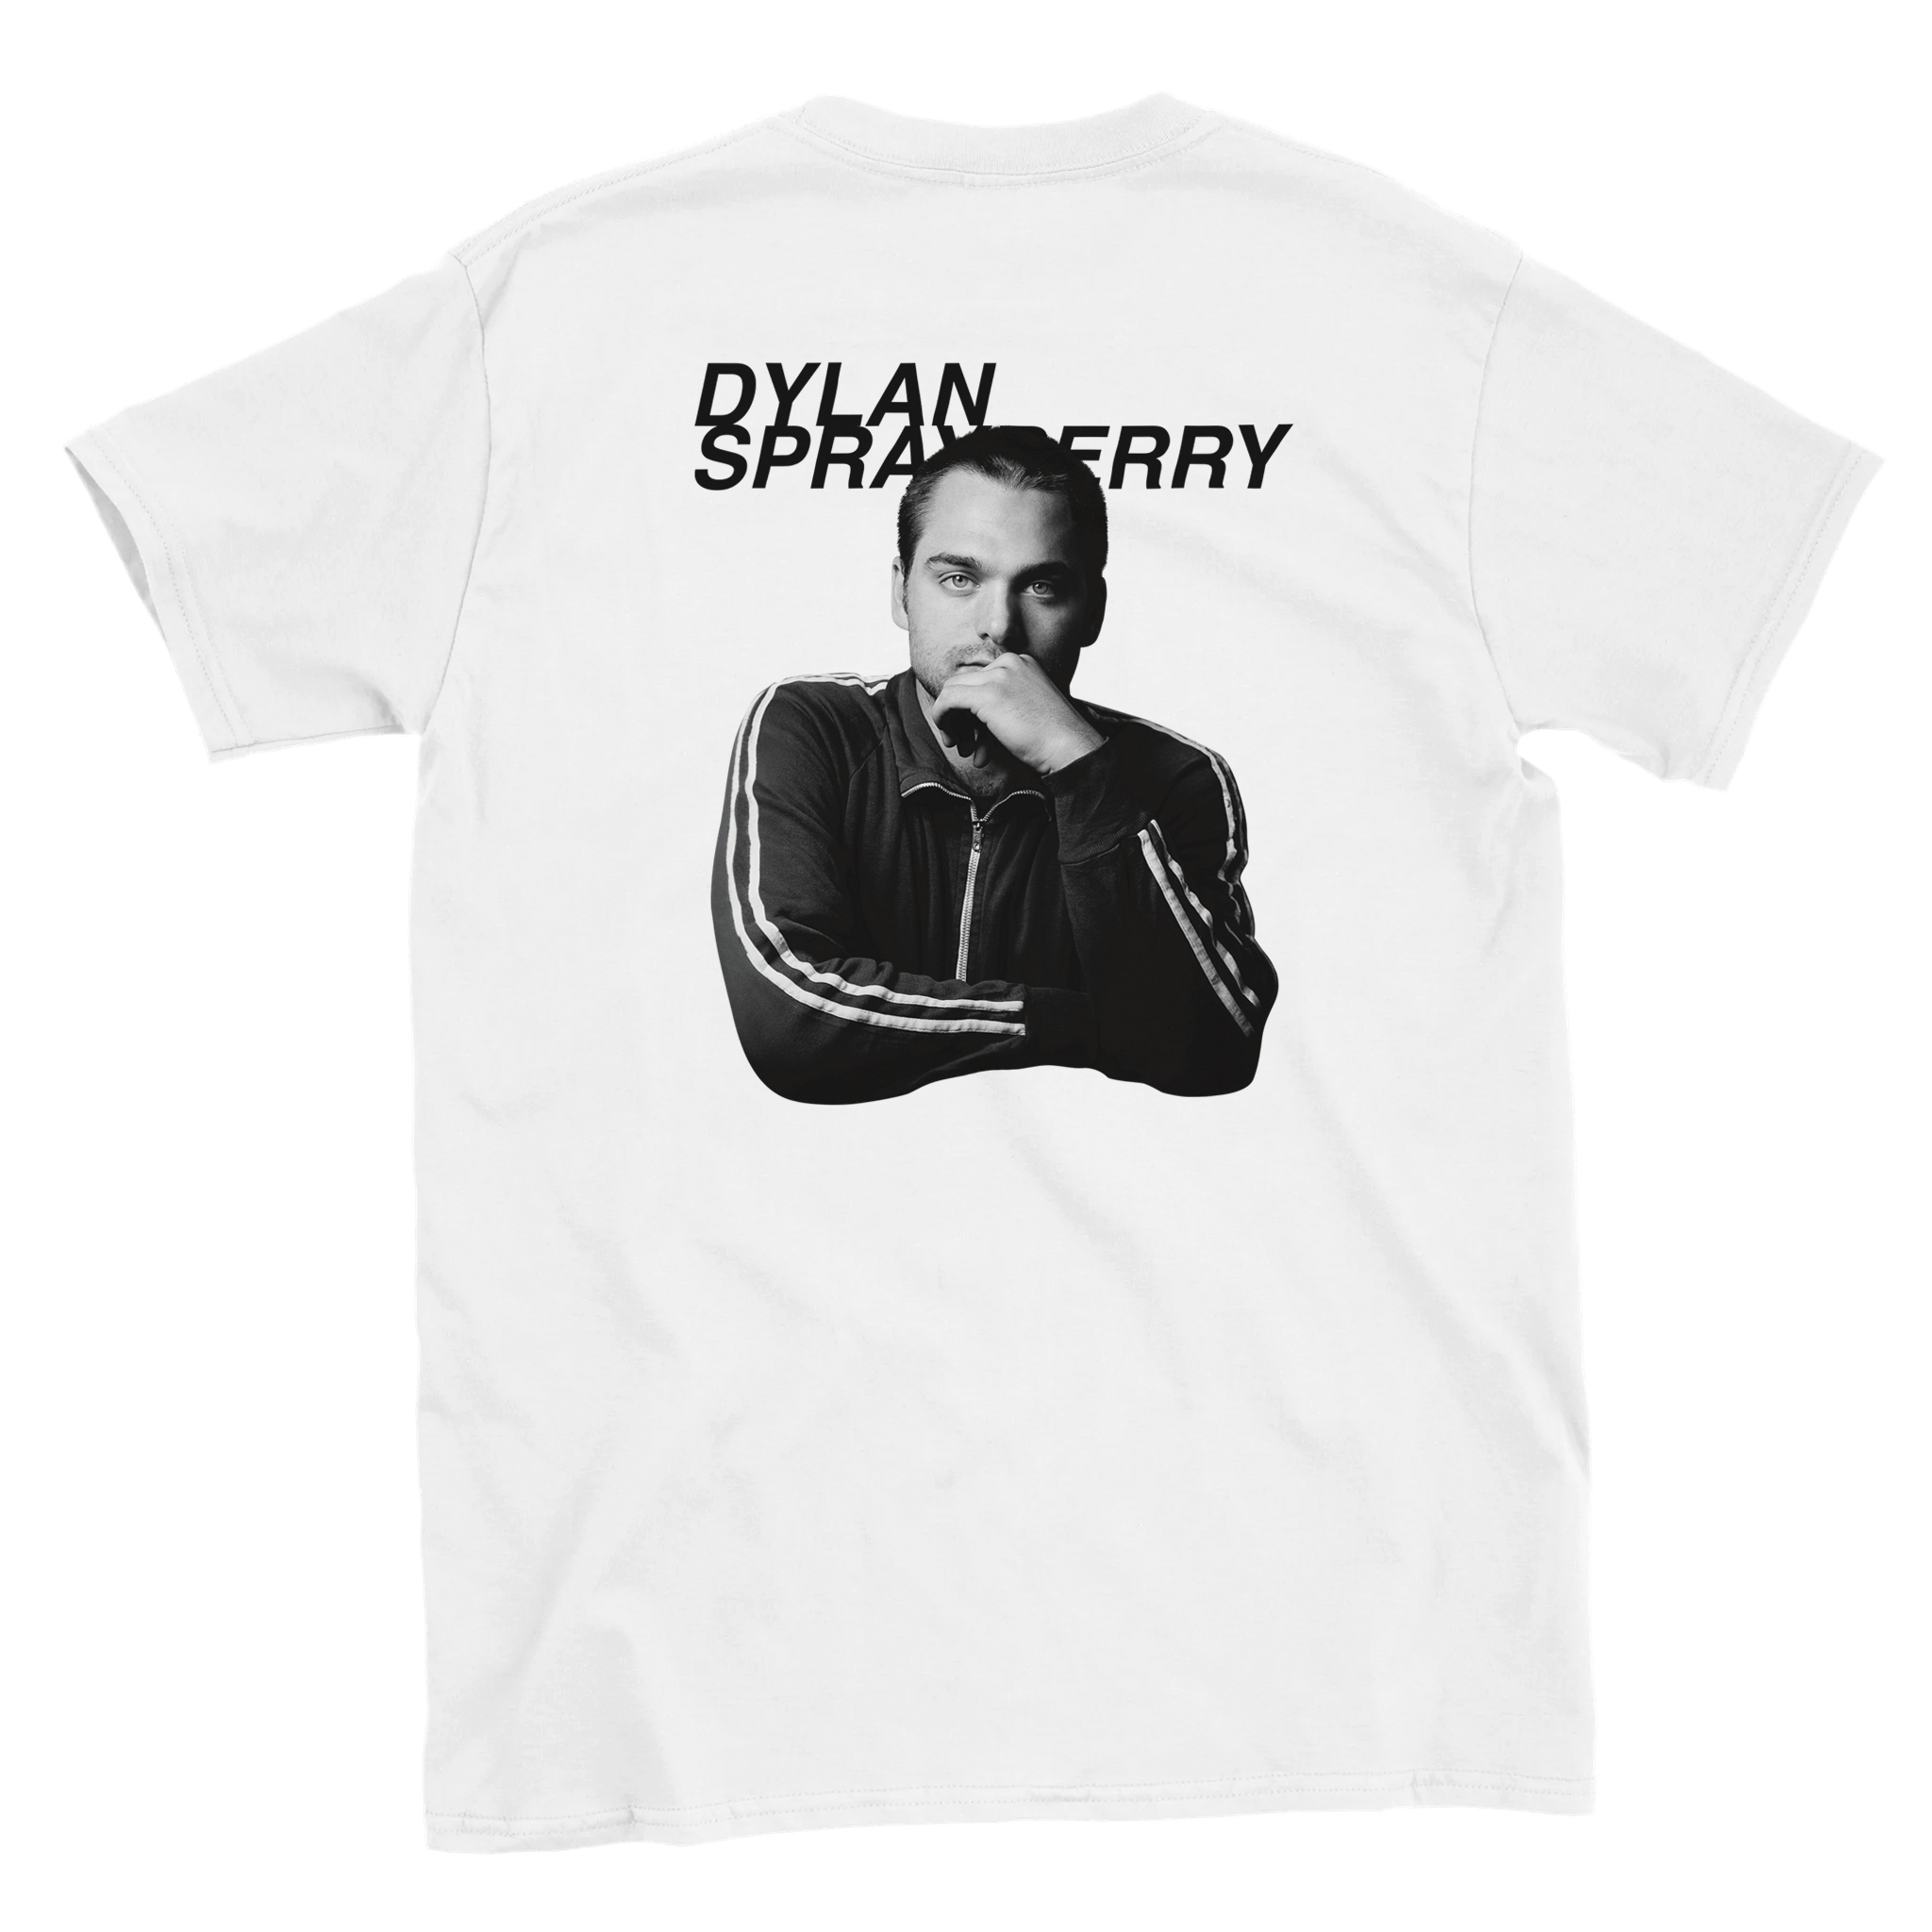 DYLAN SPRAYBERRY t-shirt